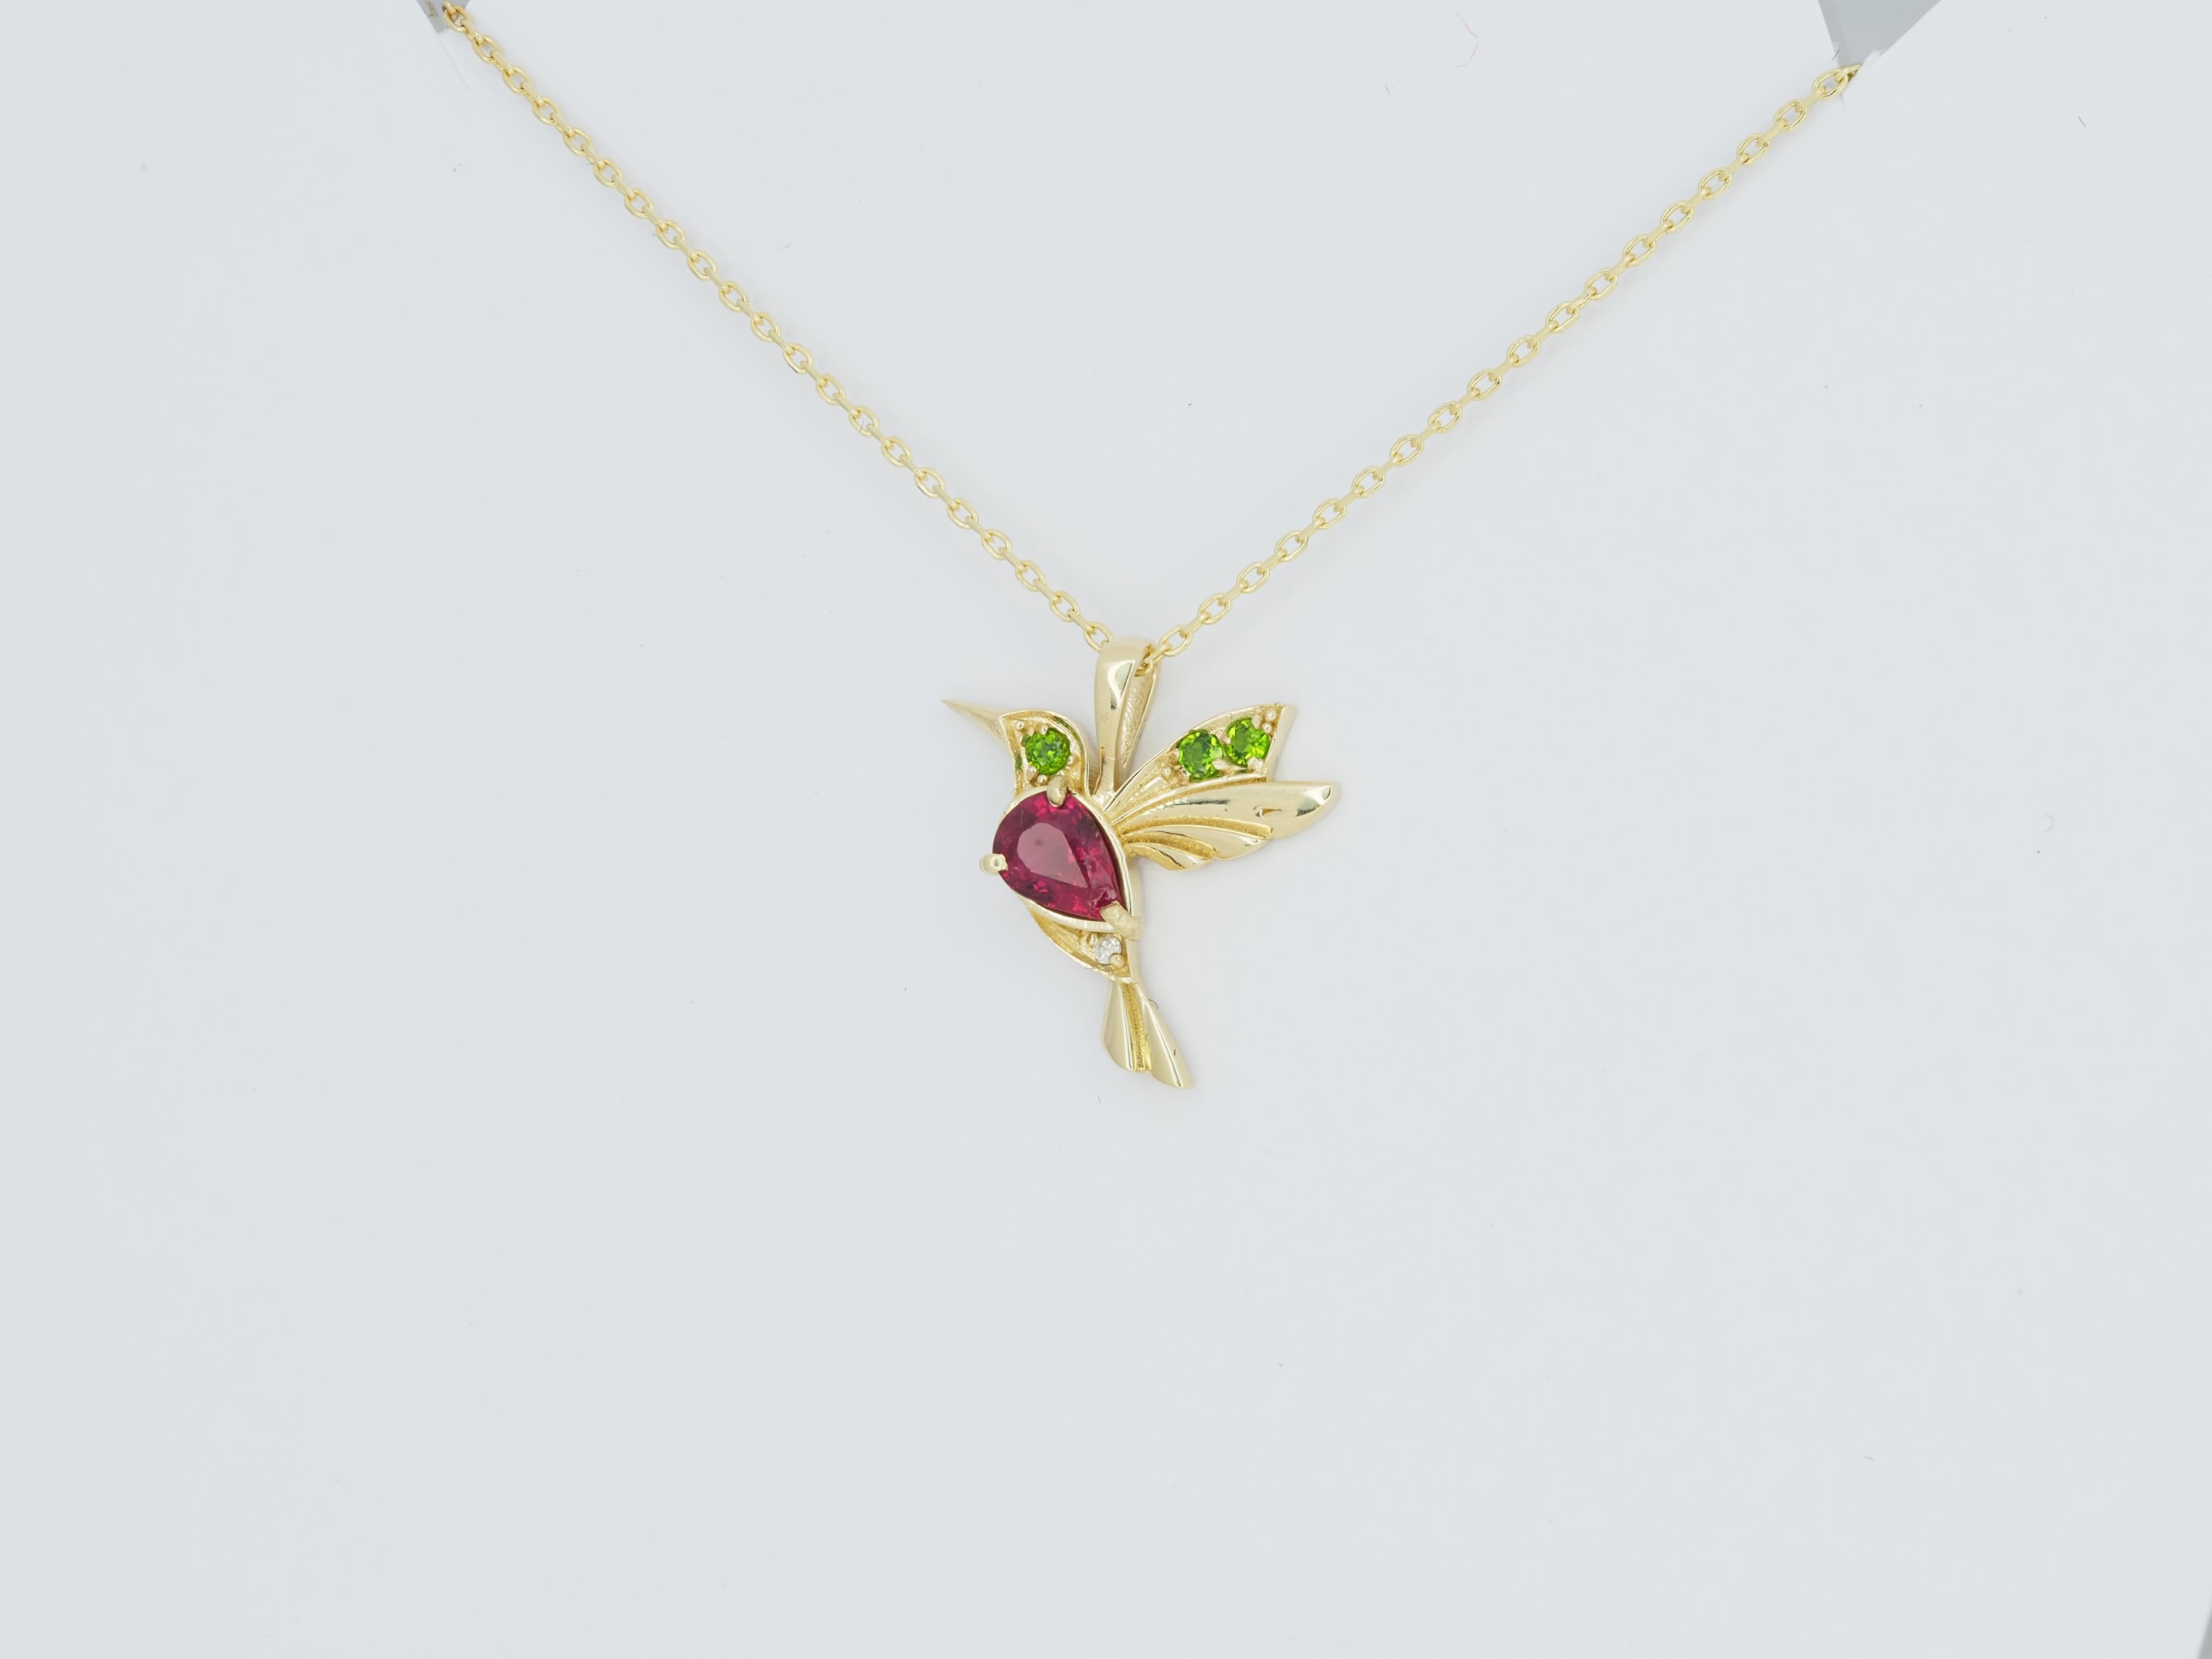 14k Gold Hummingbird Pendant with Rubies, Bird Pendant with Colored Gemstones 2